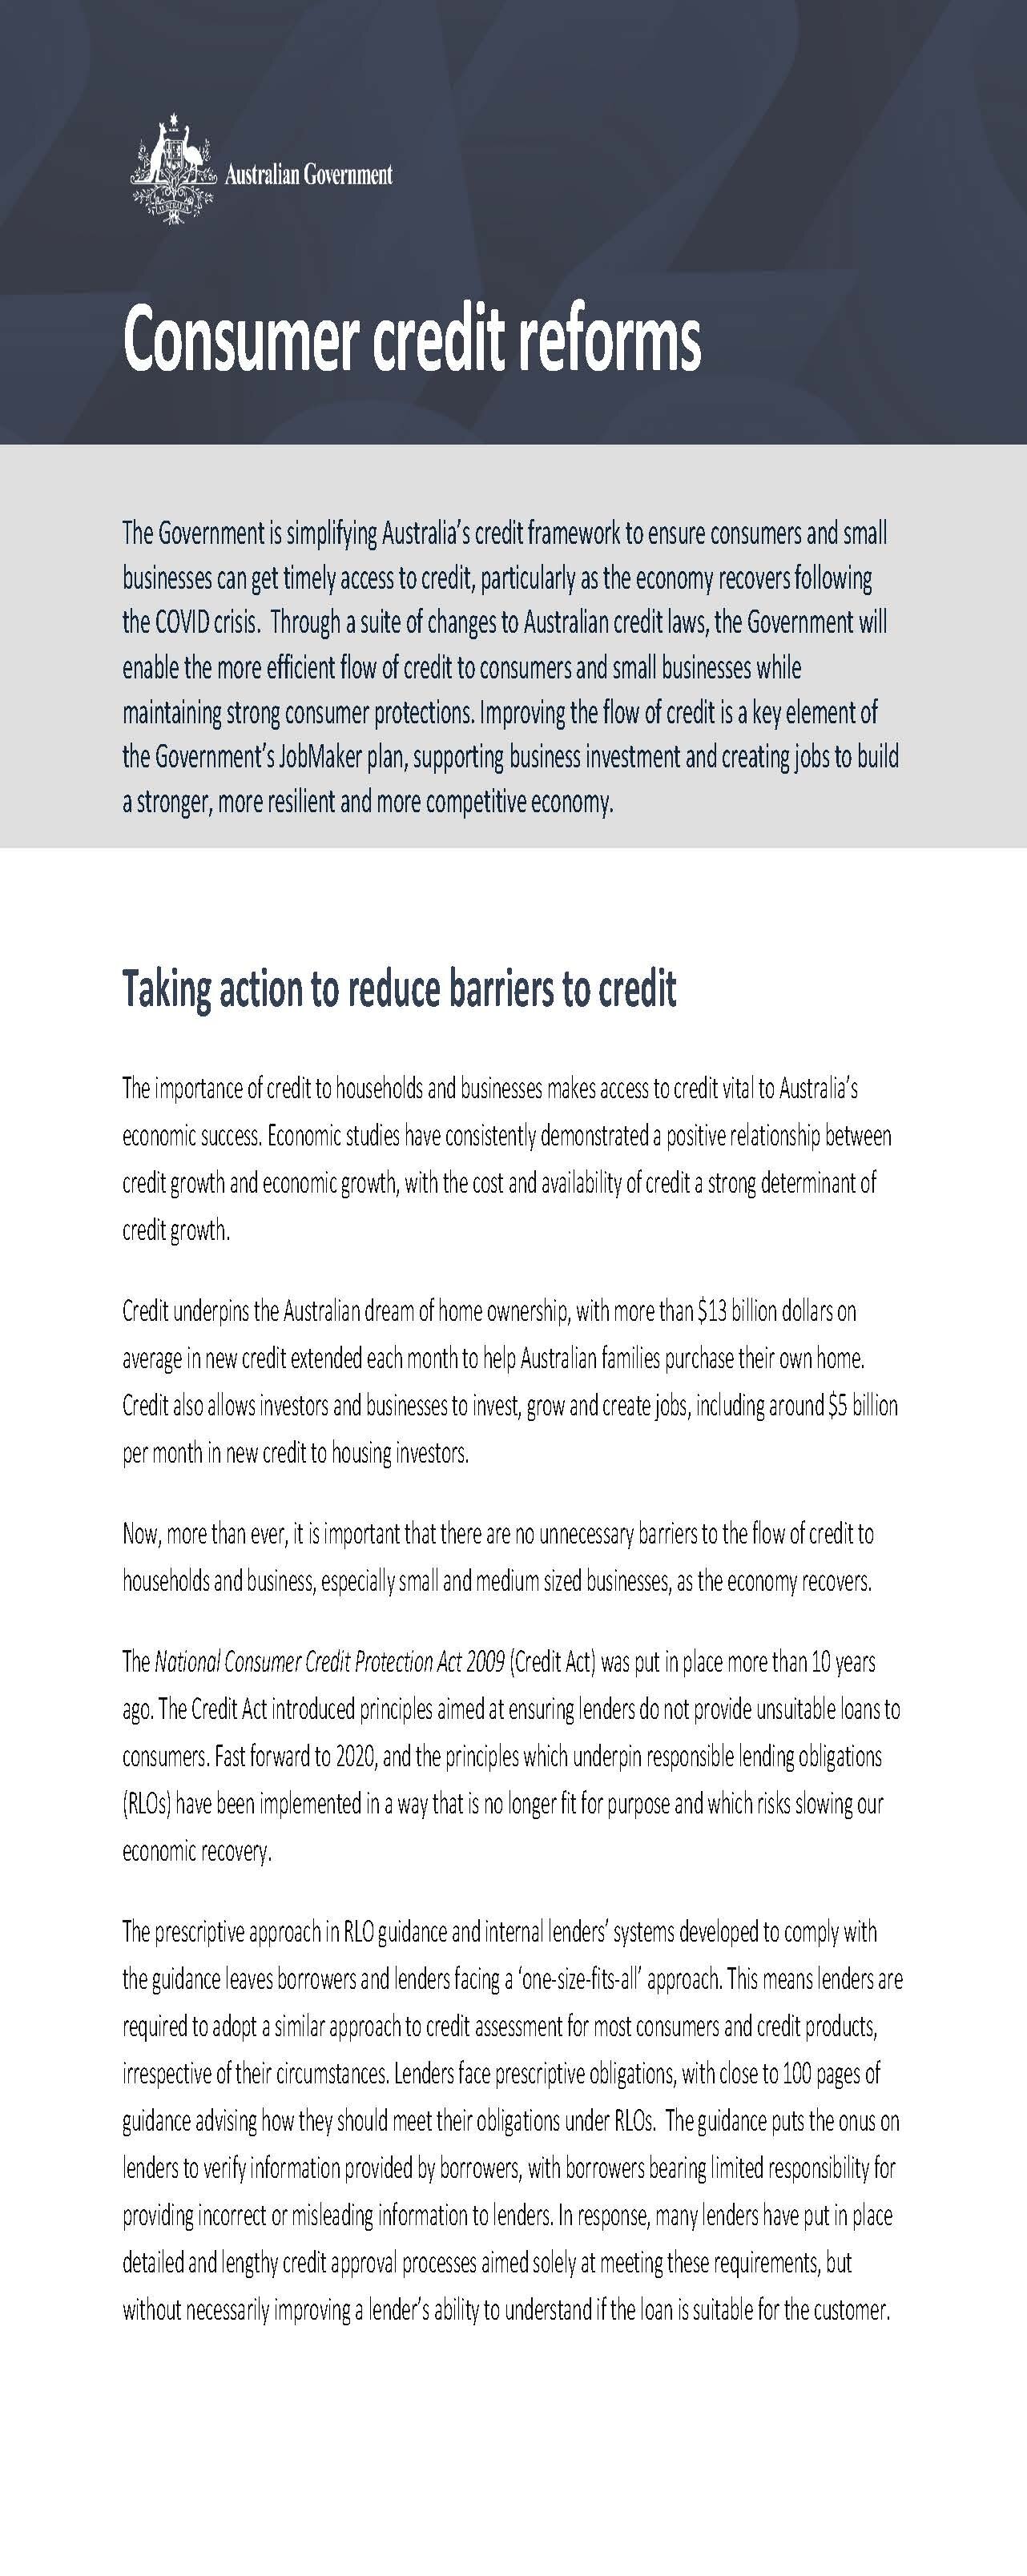 Consumer Credit reforms fact sheet